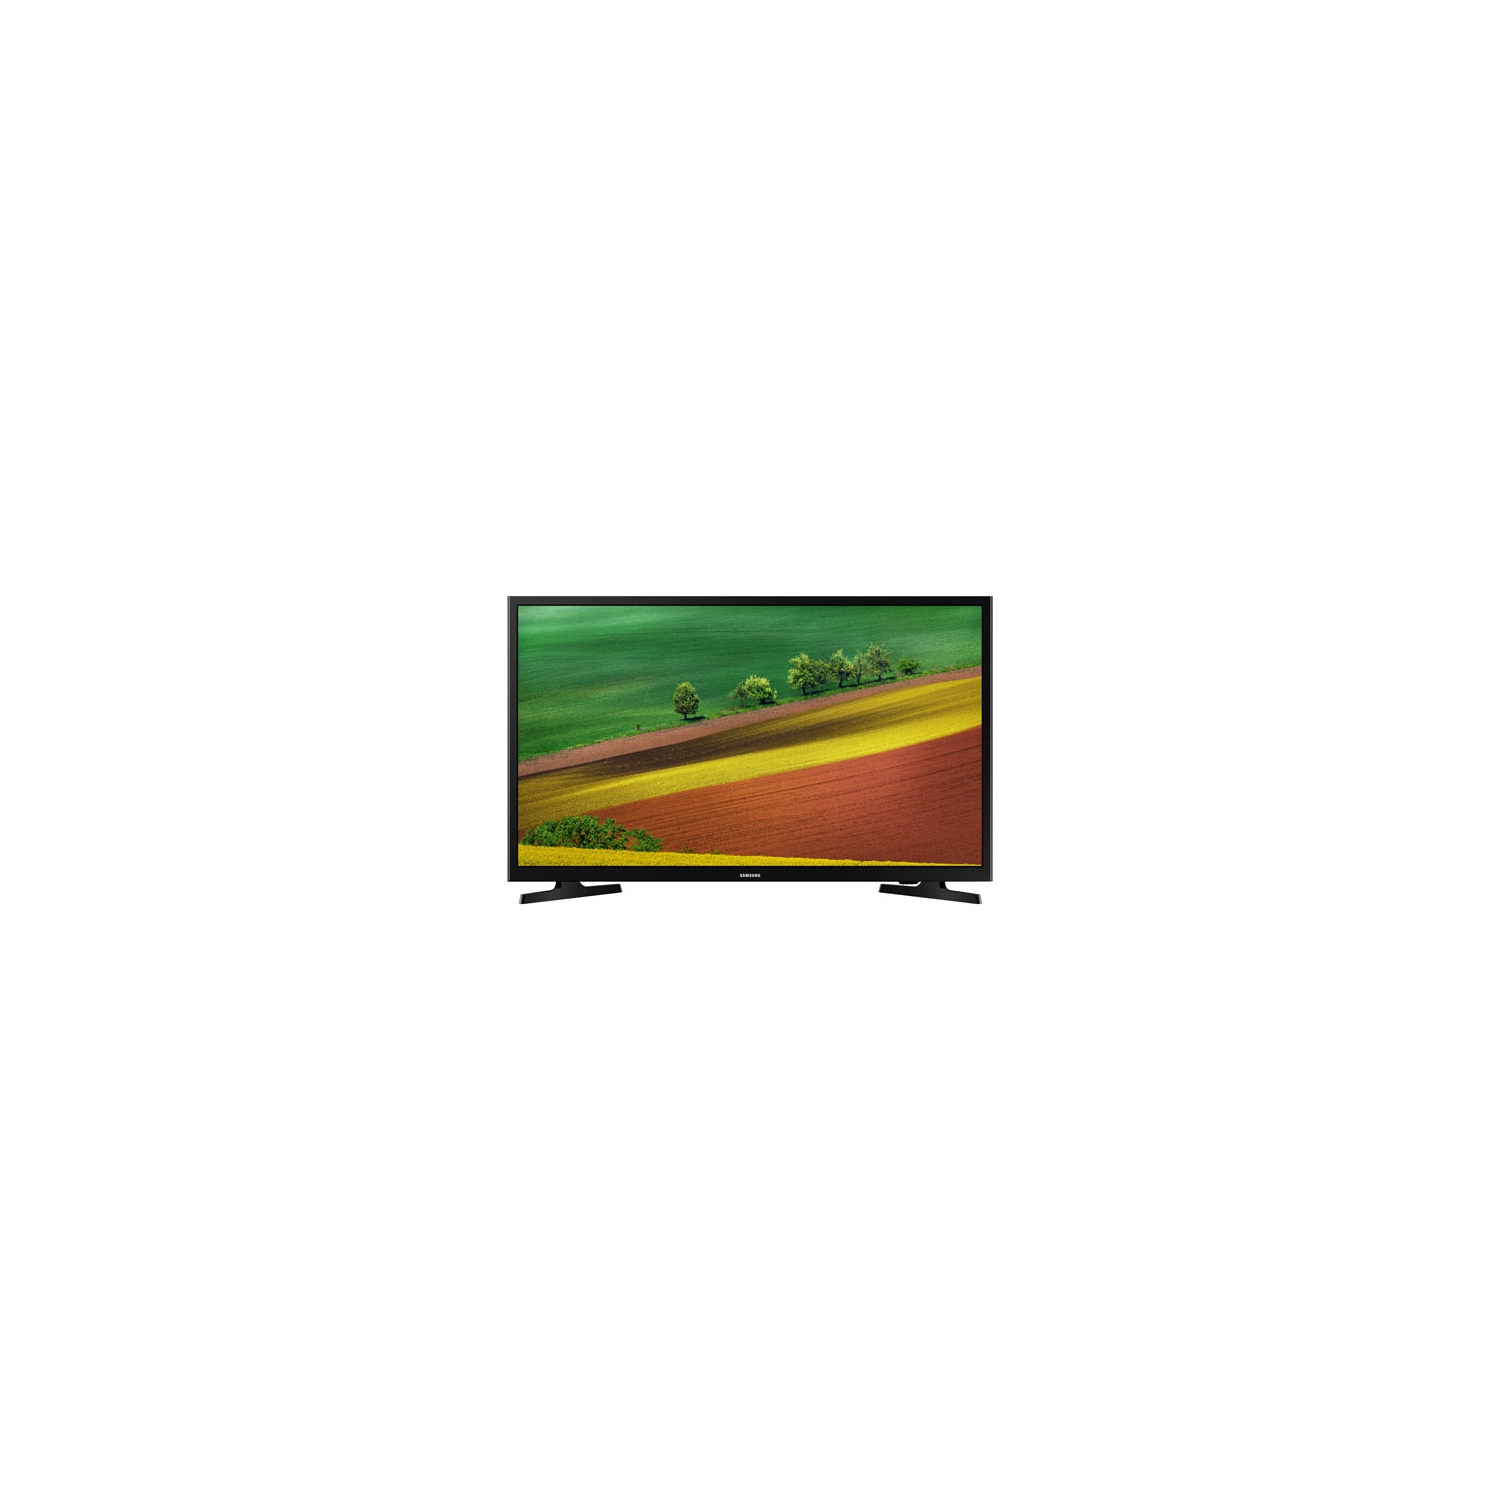 Refurbished (Good) - Samsung 32" 720p HD LED Tizen Smart TV (UN32M4500BFXZC) - Glossy Black